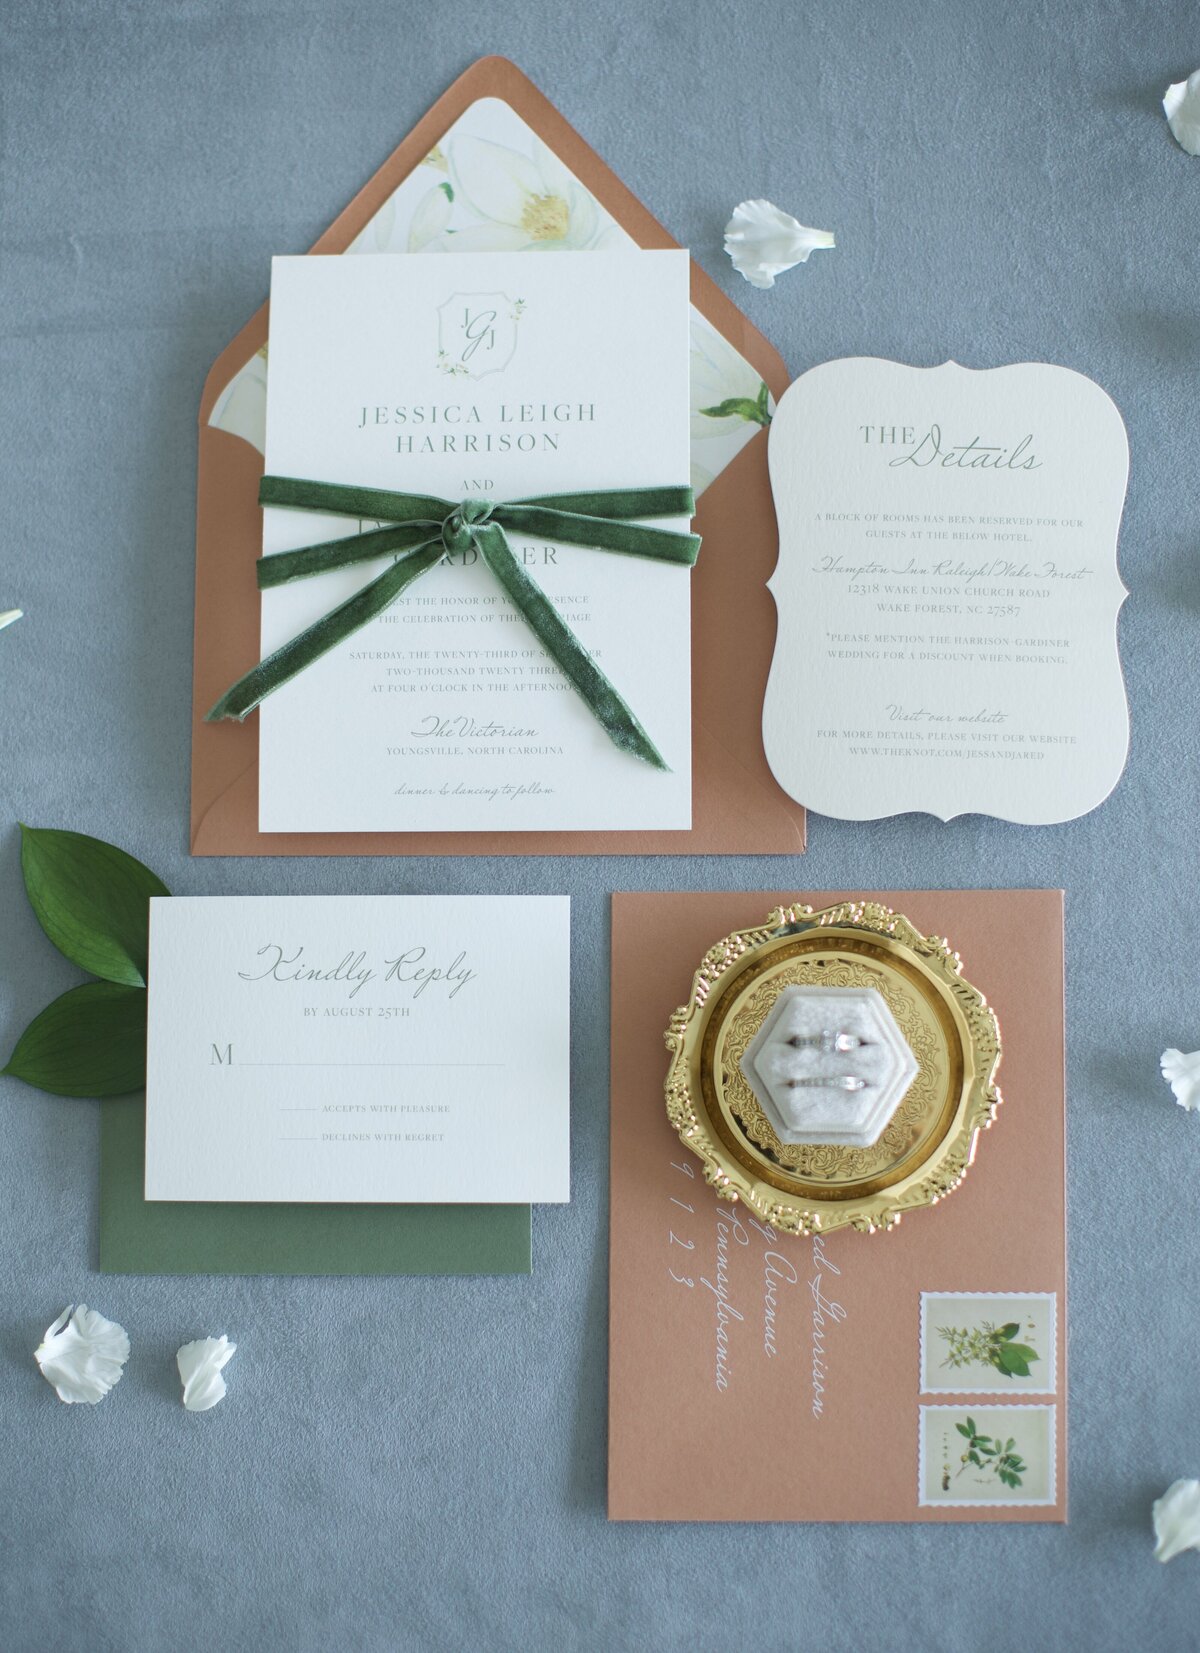 Terra cotta and green wedding invitation suite with custom monogram design by Liz Theal